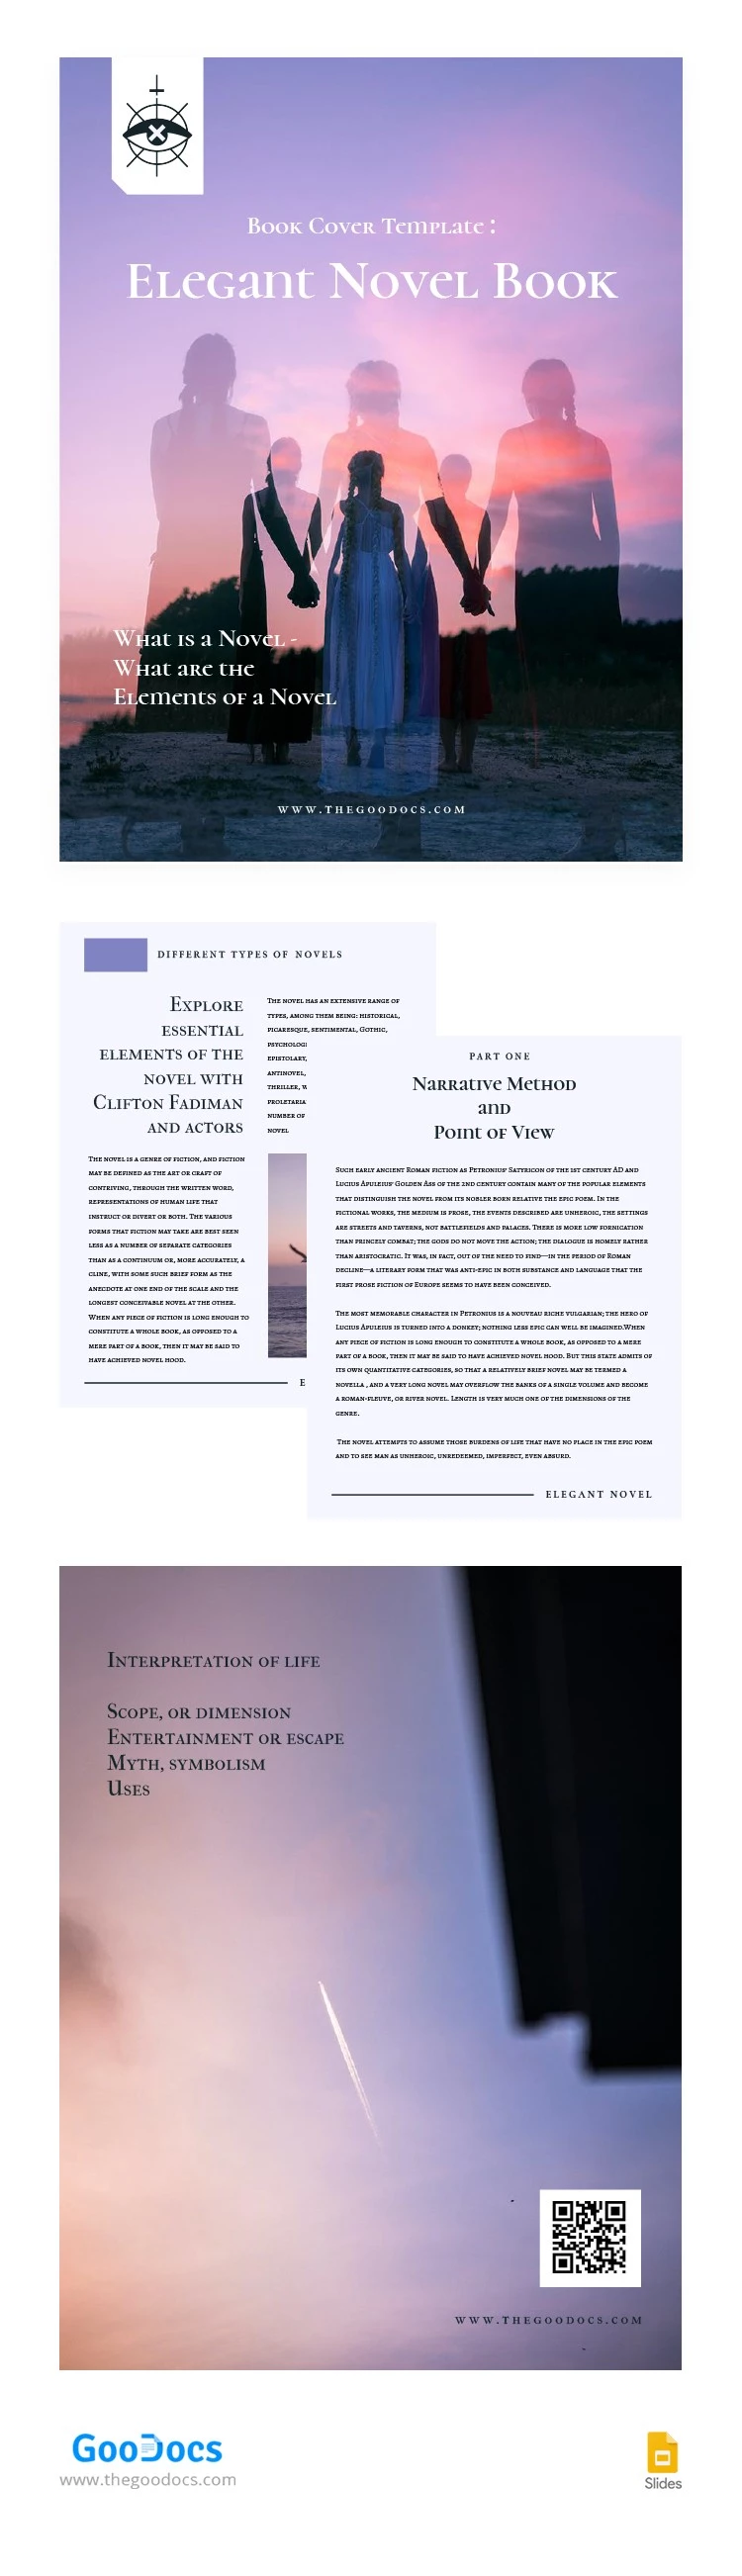 Eleganter Roman Buch - free Google Docs Template - 10063900